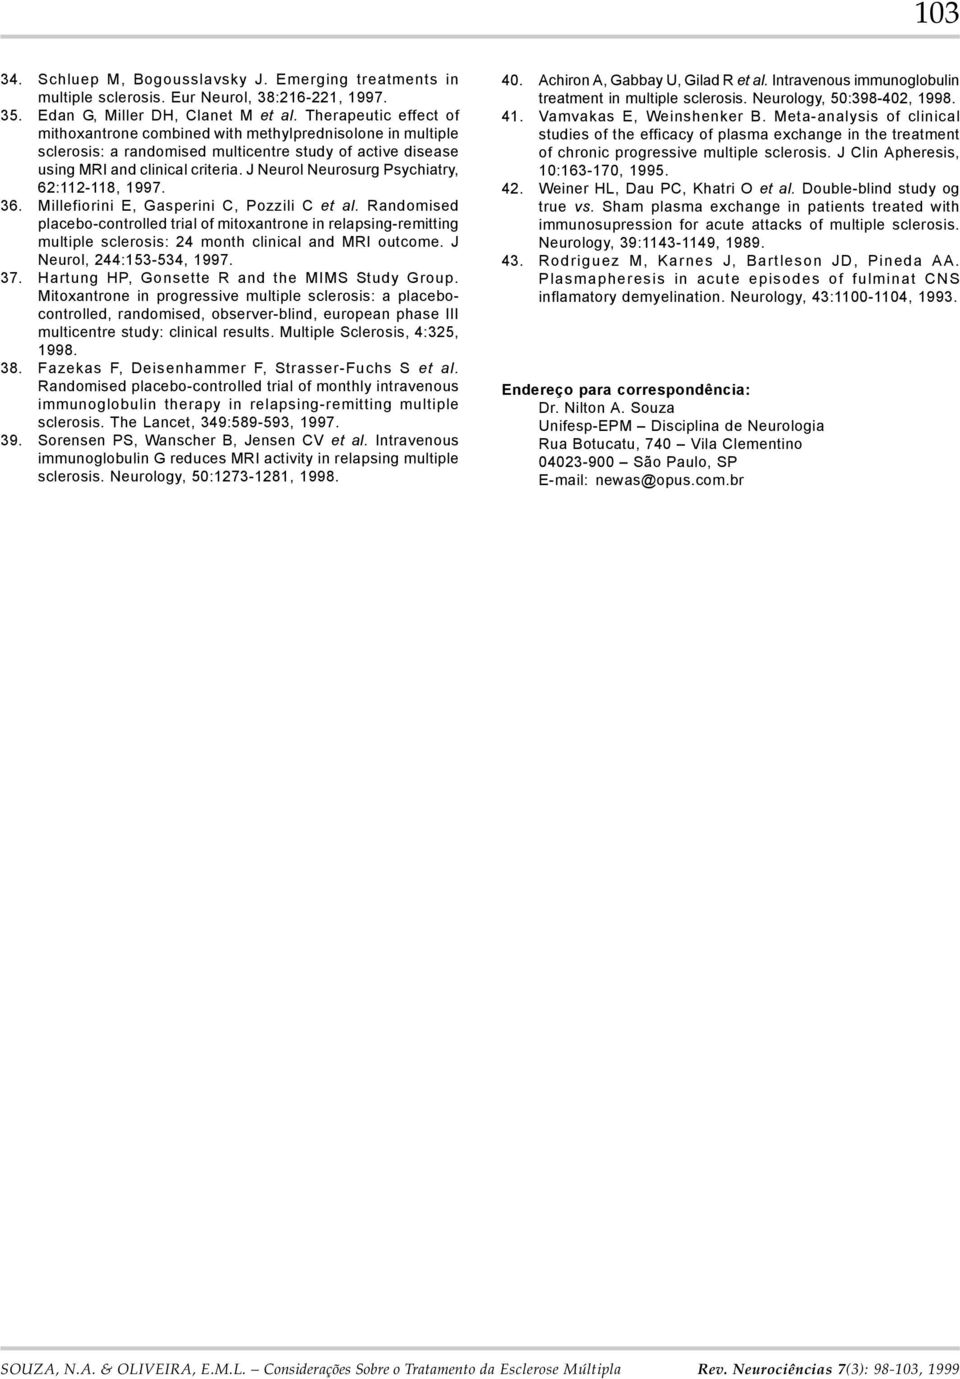 J Neurol Neurosurg Psychiatry, 62:112-118, 1997. 36. Millefiorini E, Gasperini C, Pozzili C et al.